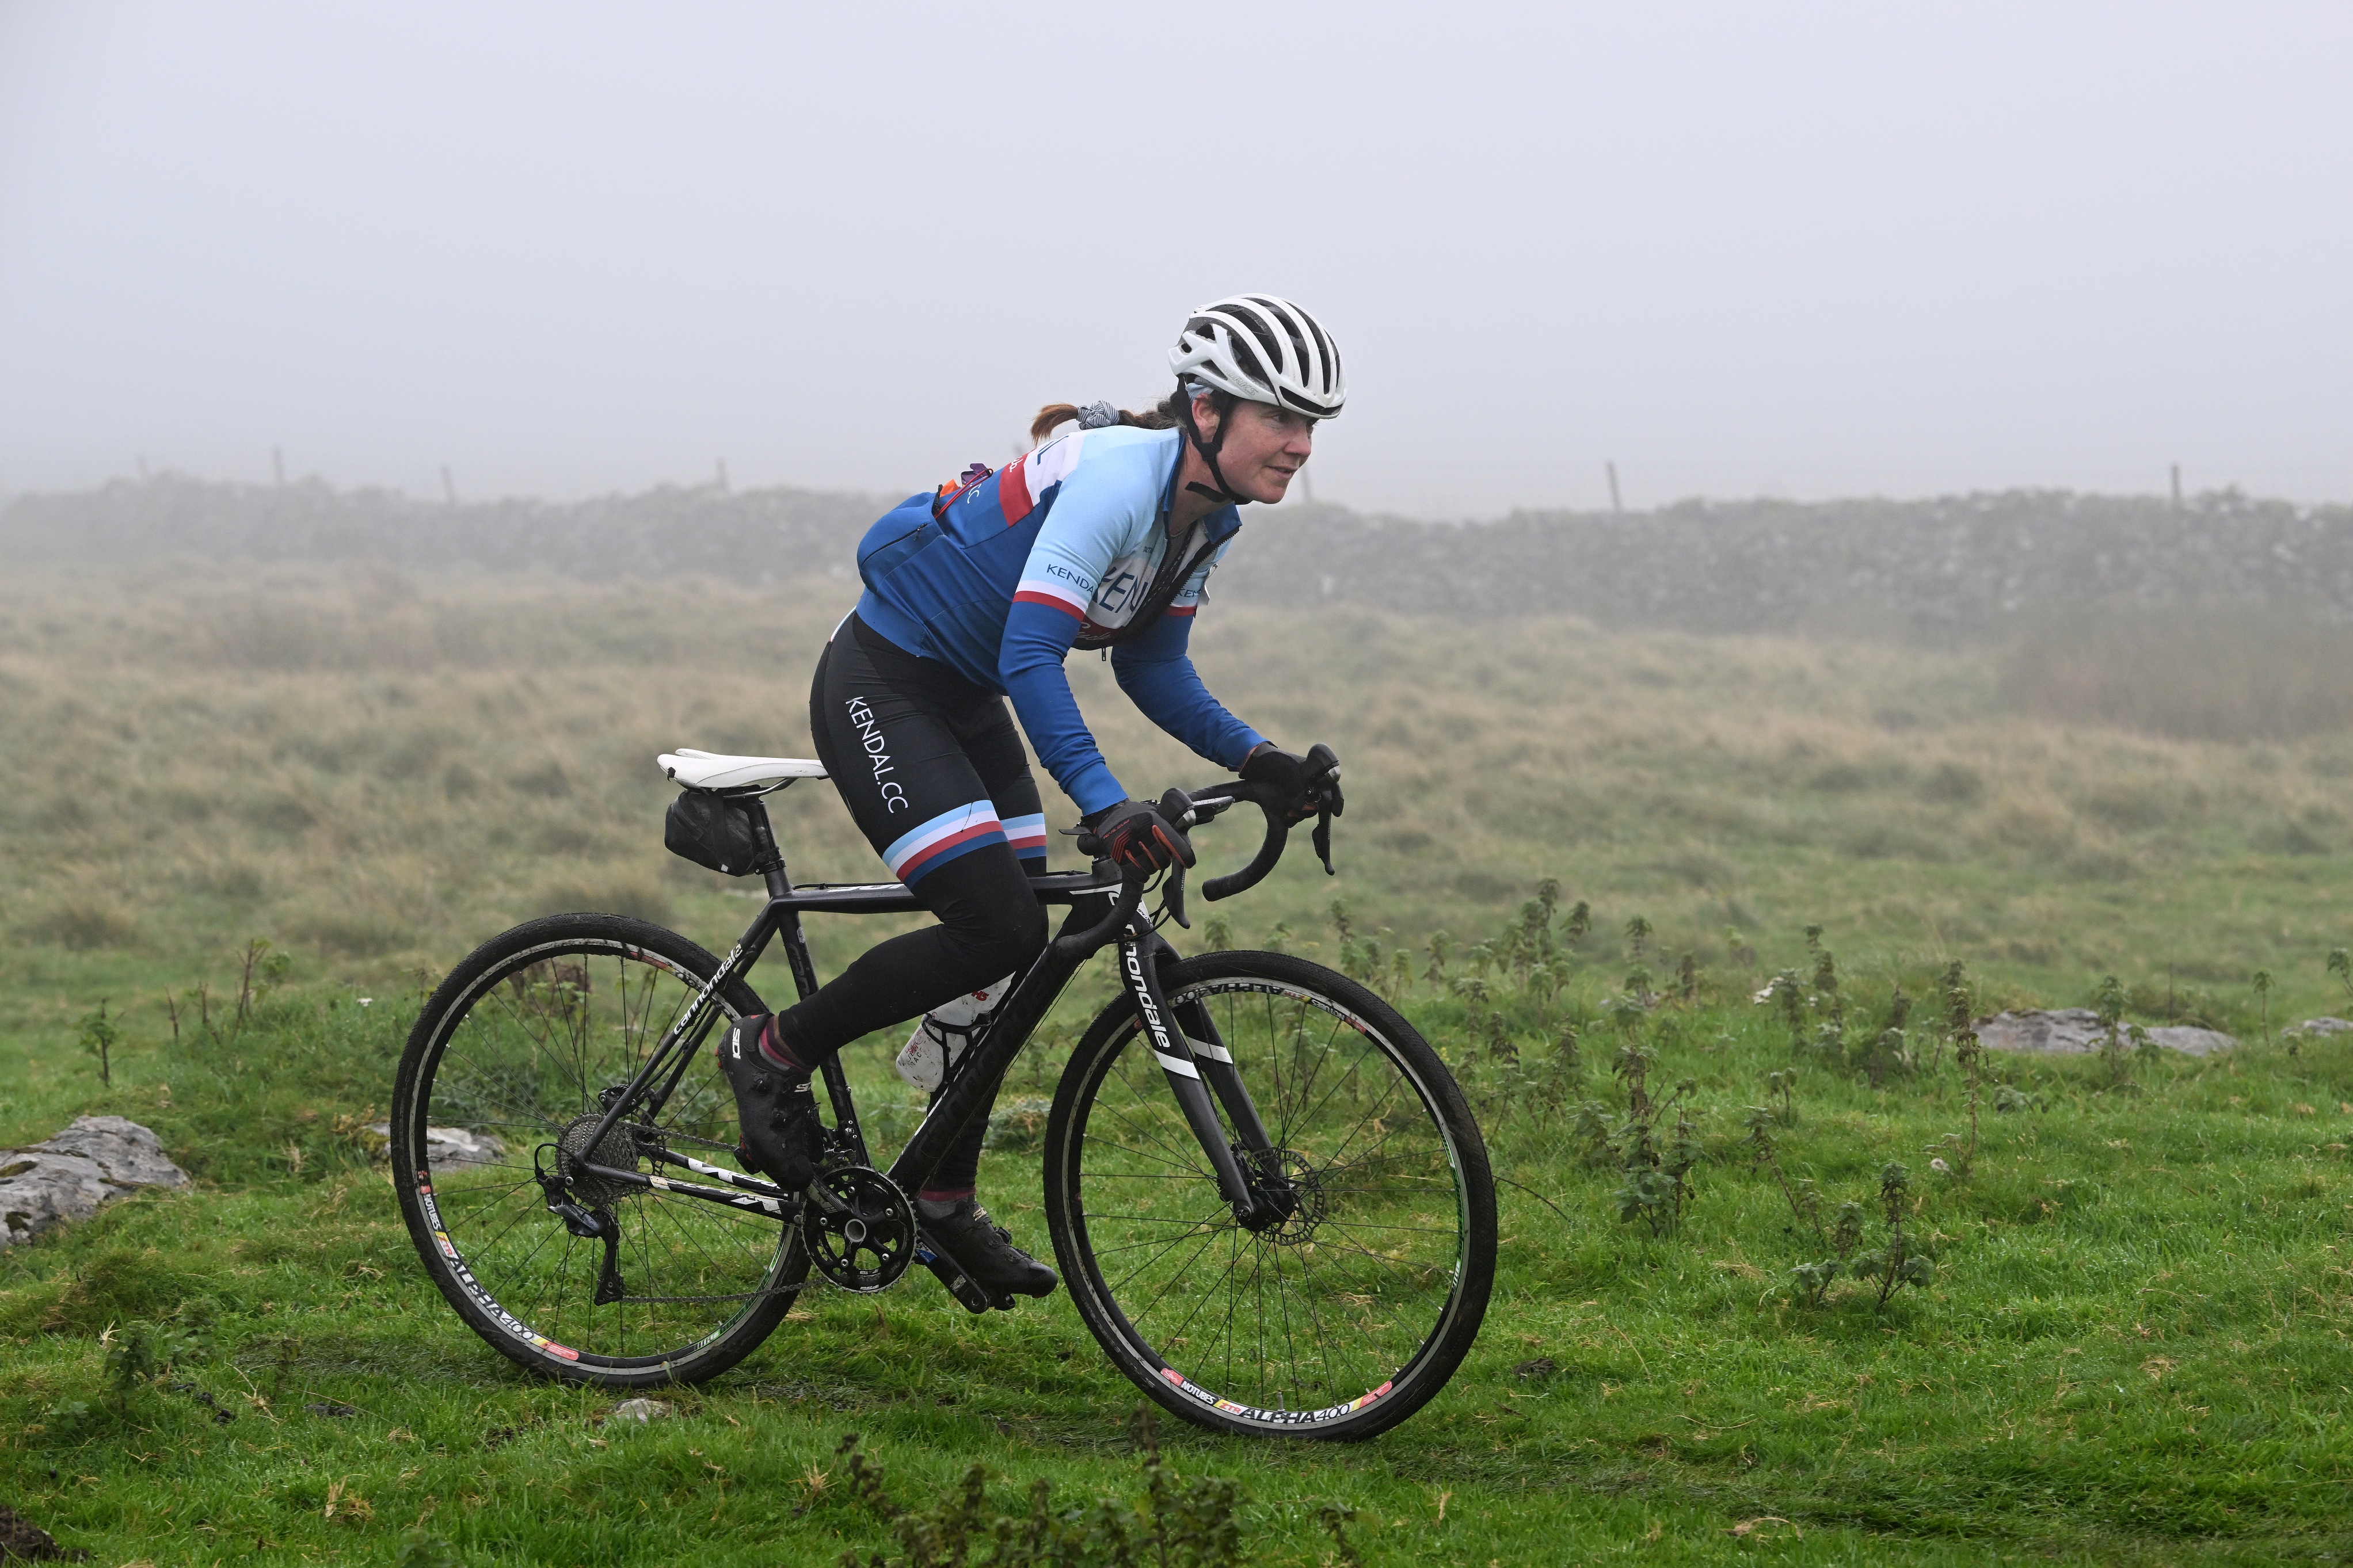 Helen Jackson races the Three Peaks Cyclocross